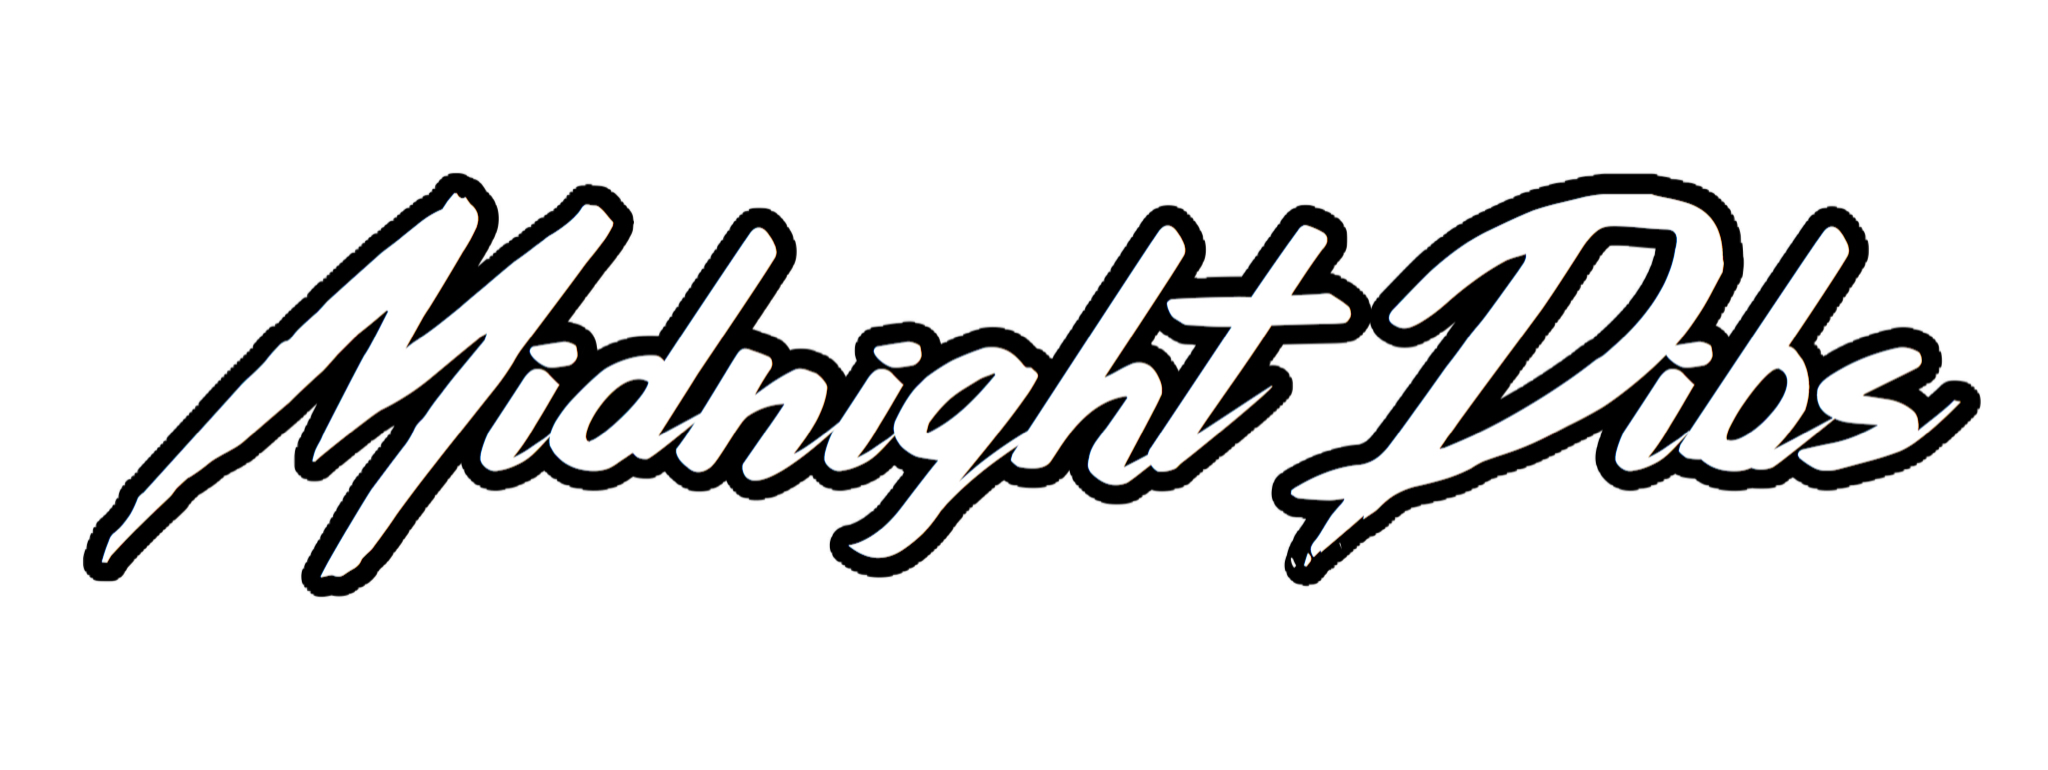 Midnight Dibs